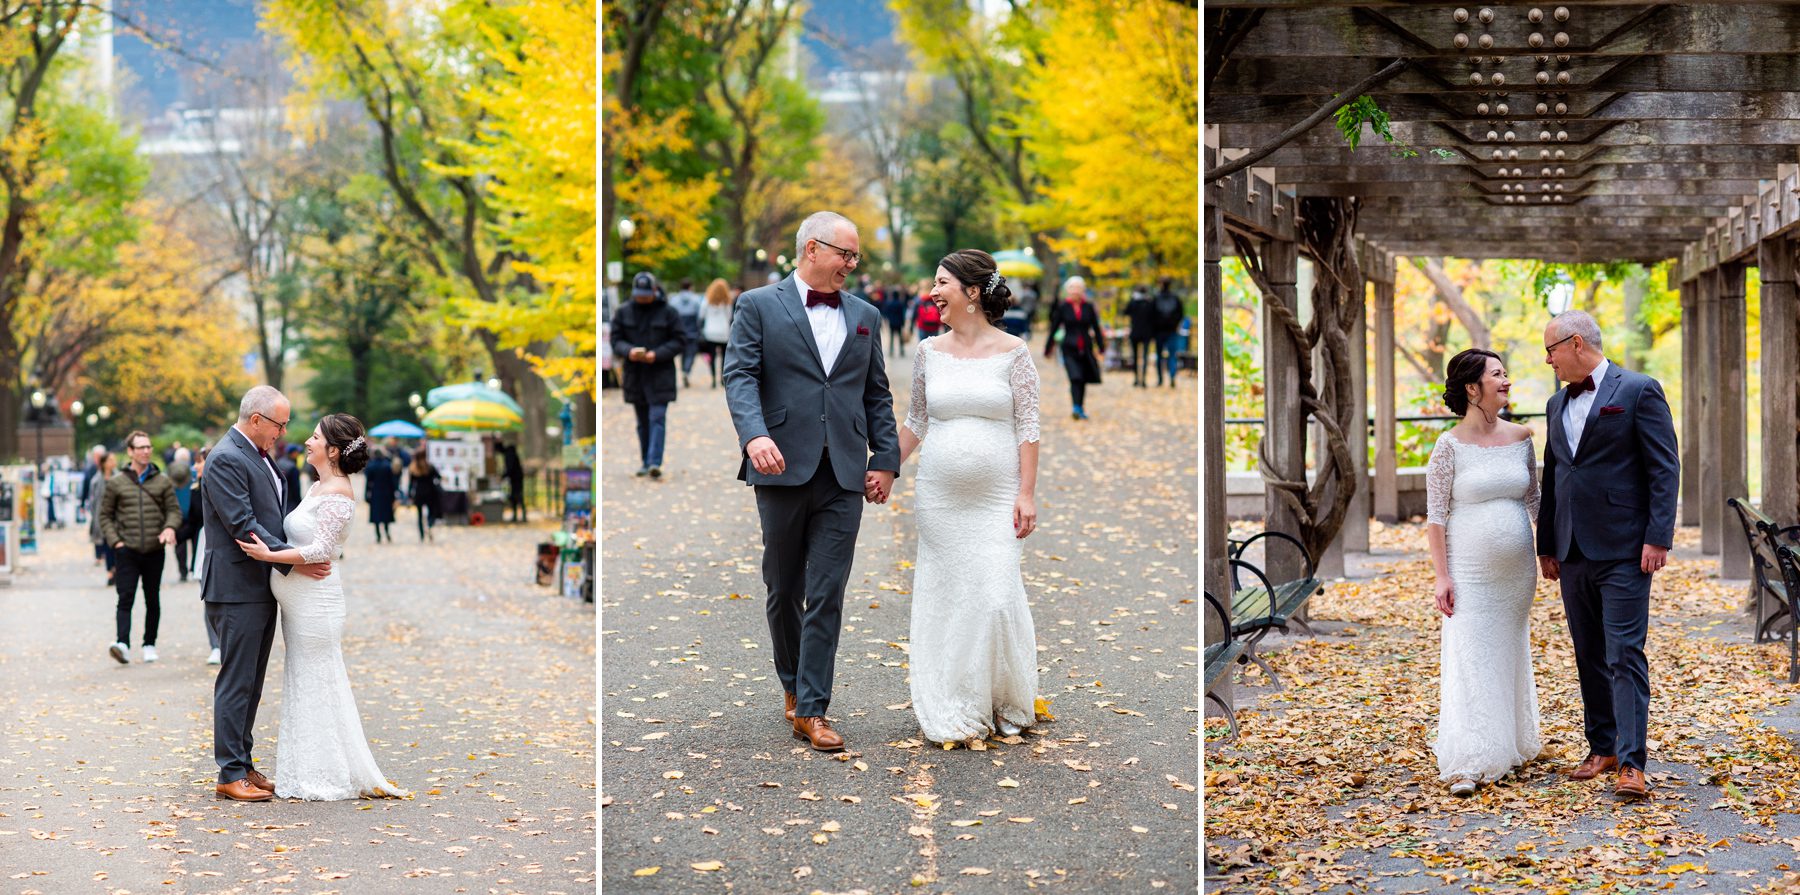 Where to Take Wedding Photos in Central Park 